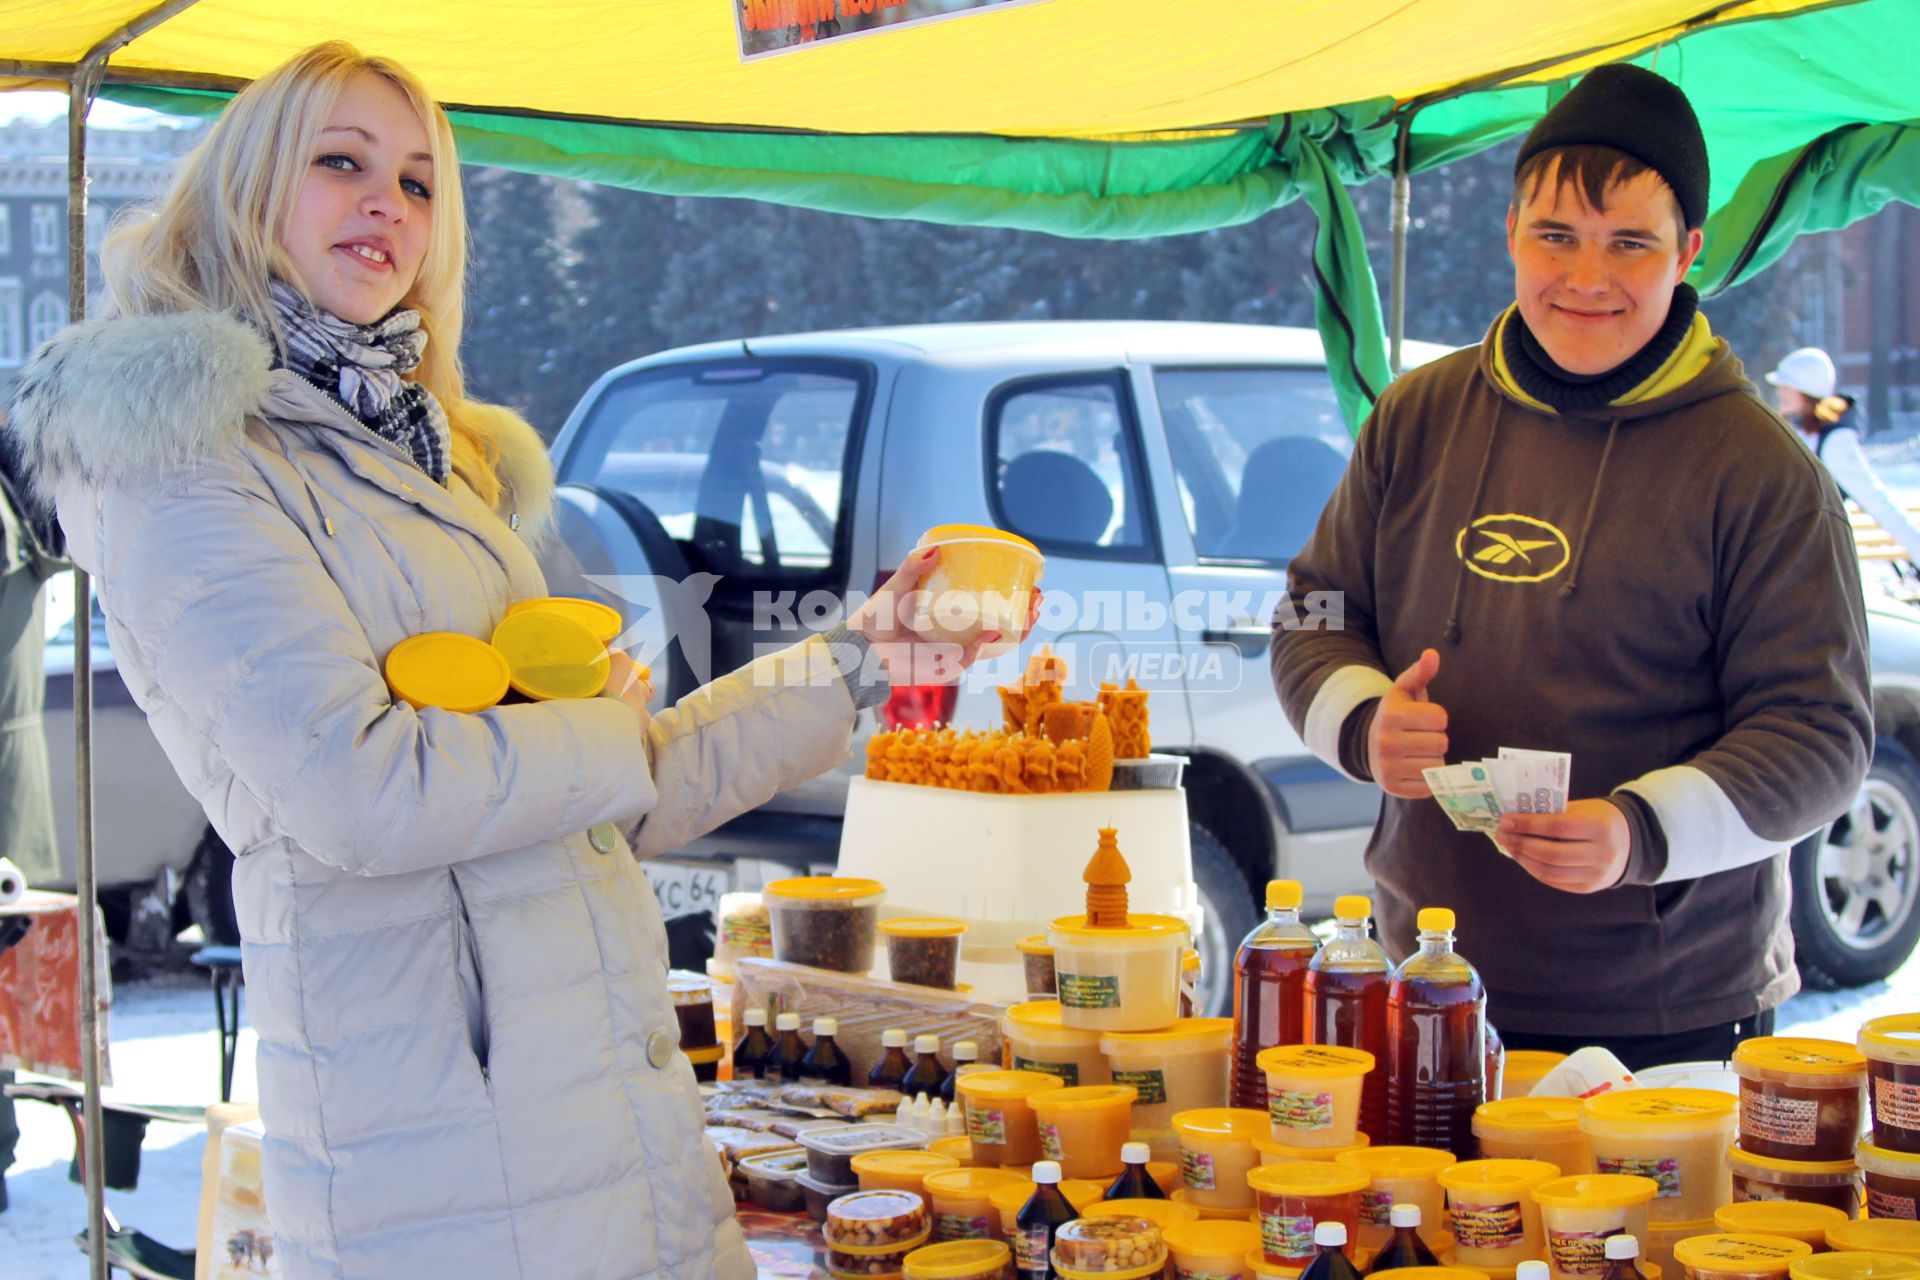 Ярмарка меда. На снимке: девушка покупает мед.